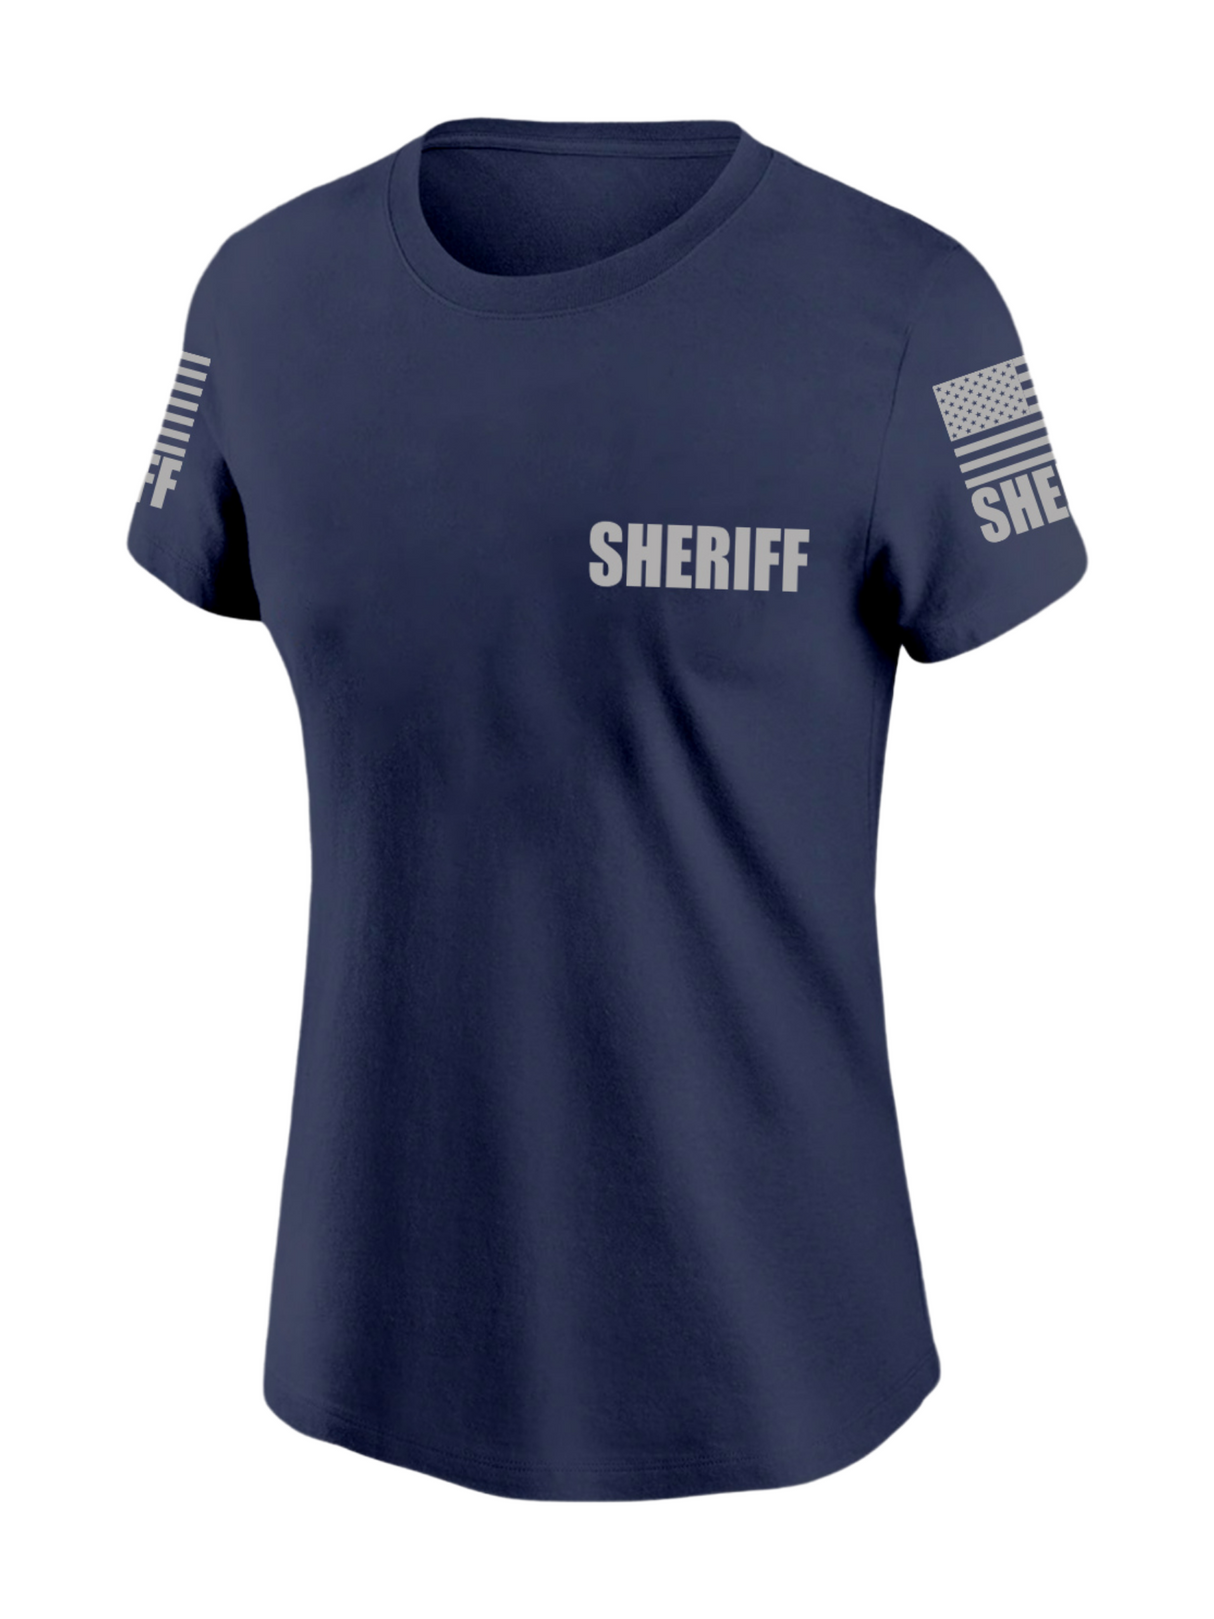 Navy Blue Sheriff Women's Shirt - Short Sleeve - FEDS Apparel